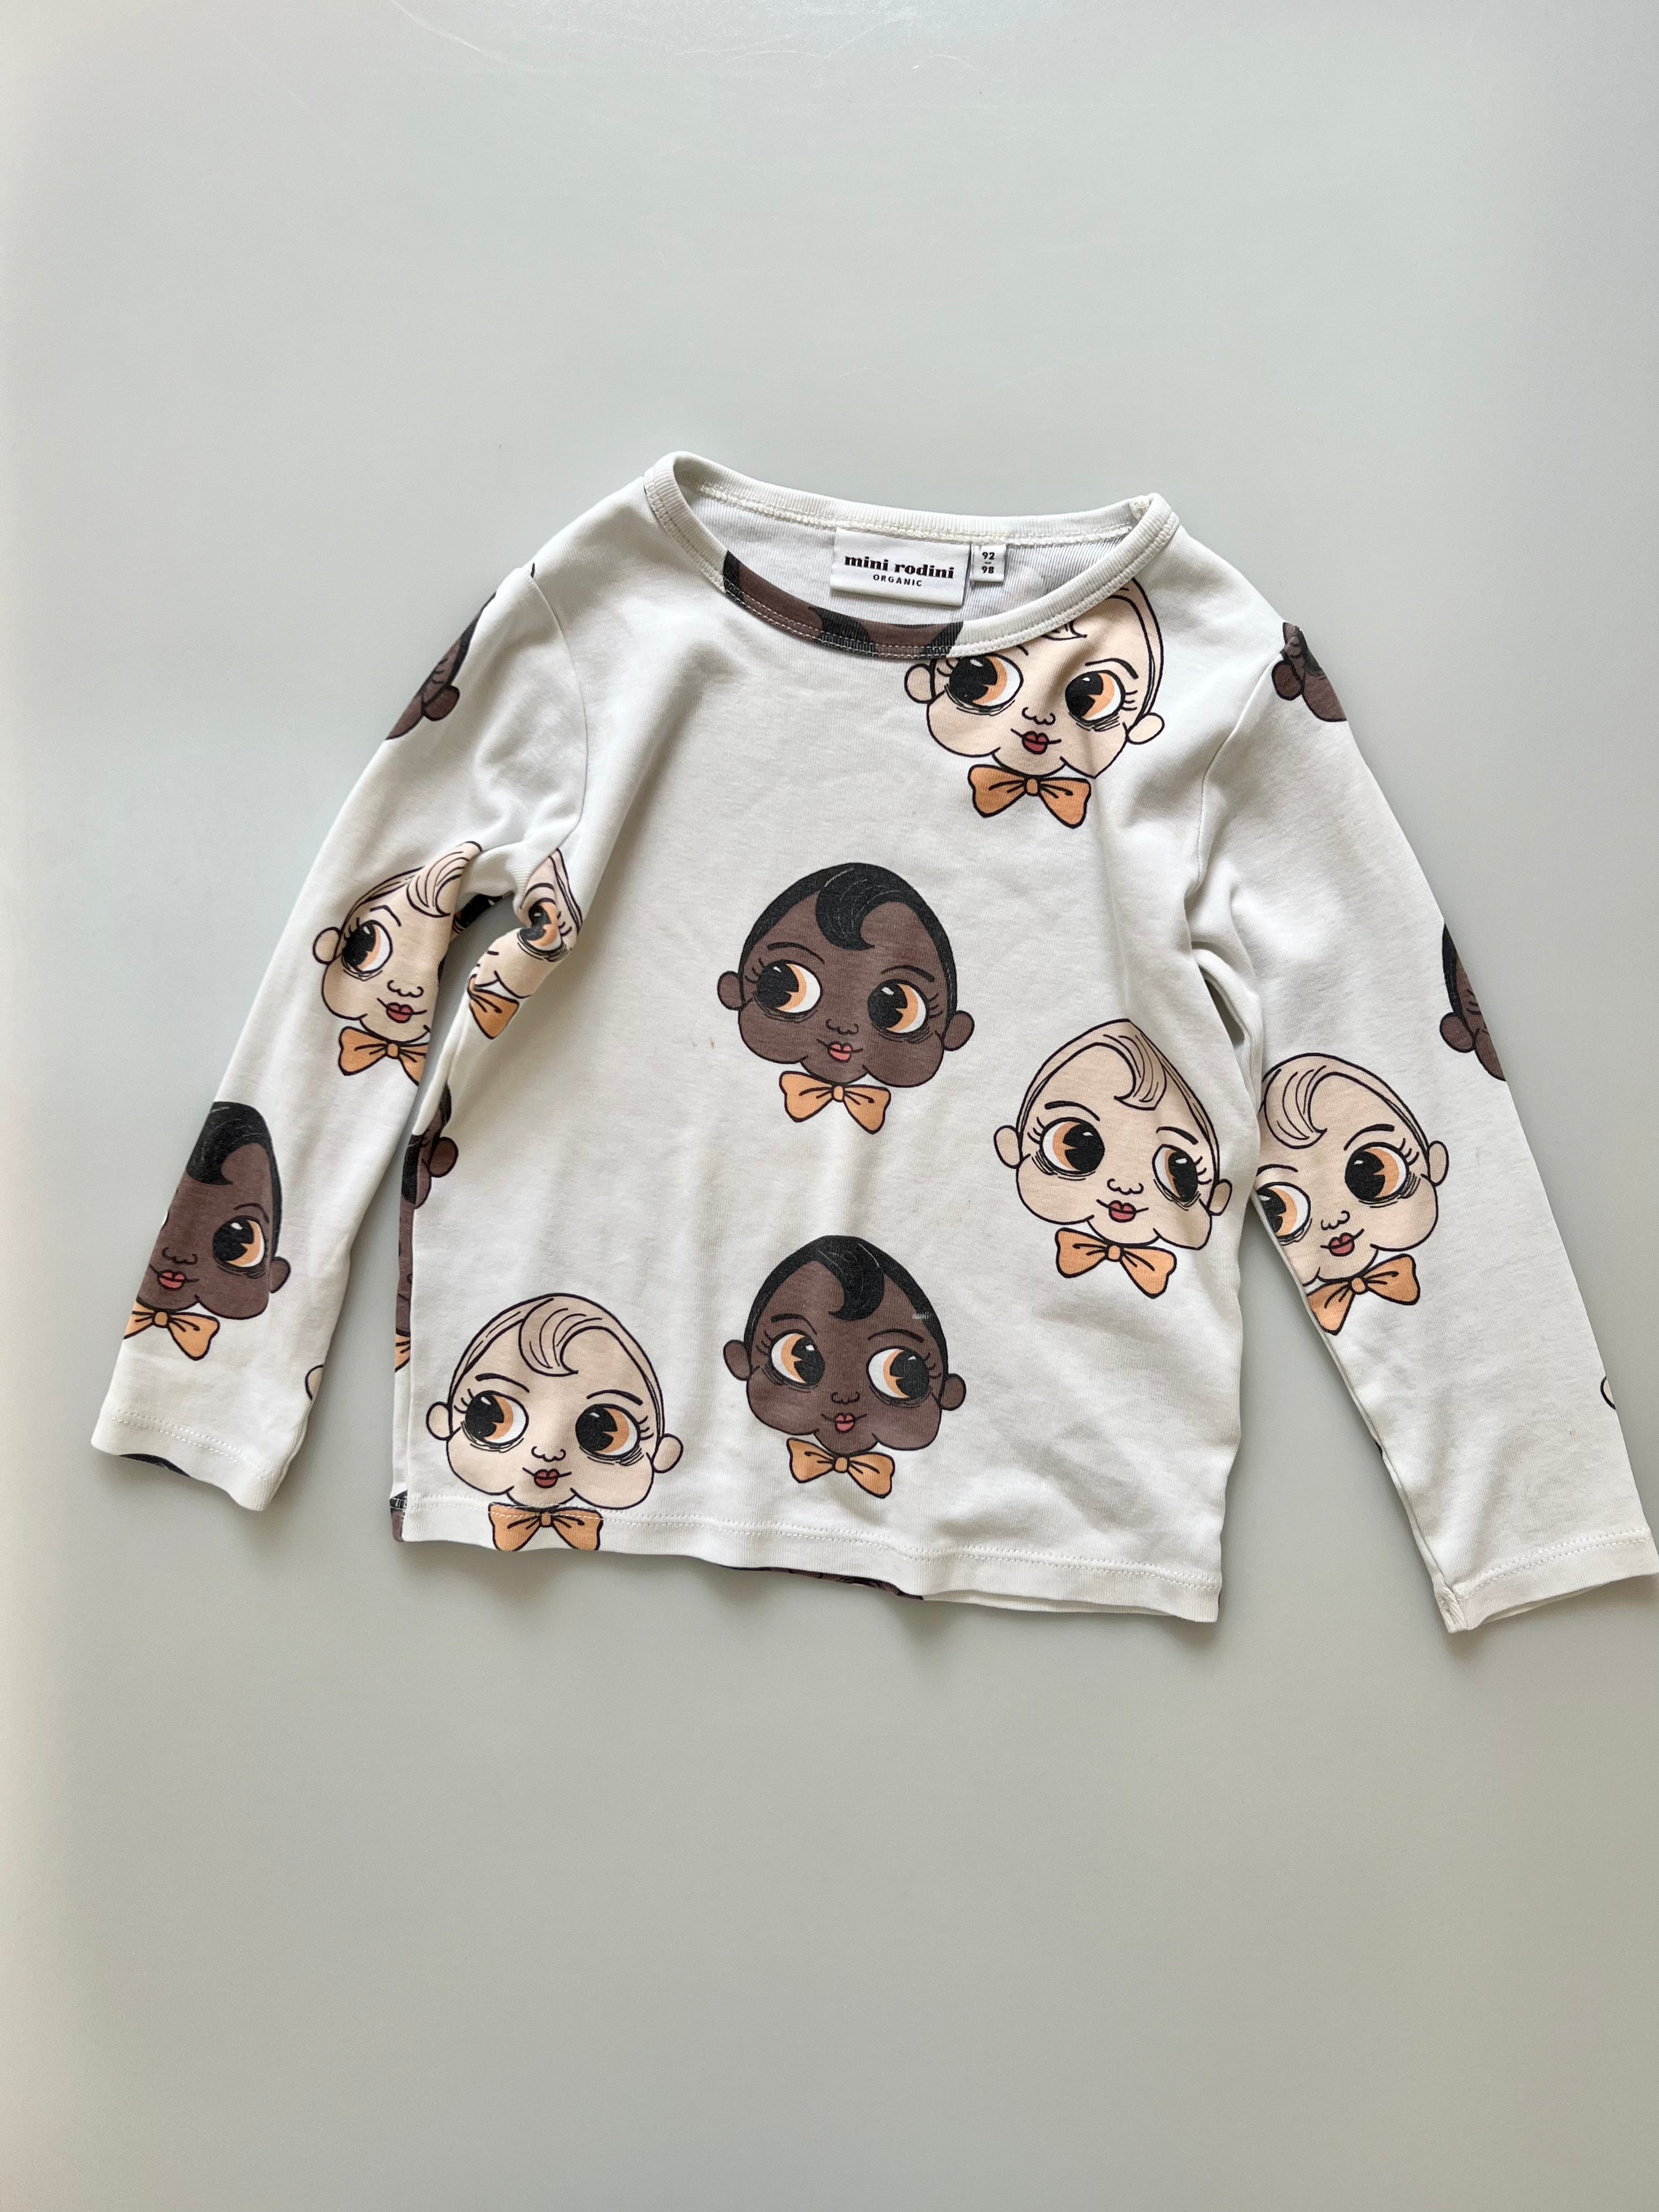 Mini Rodini Babies Print Tee Shirt Age 2-3